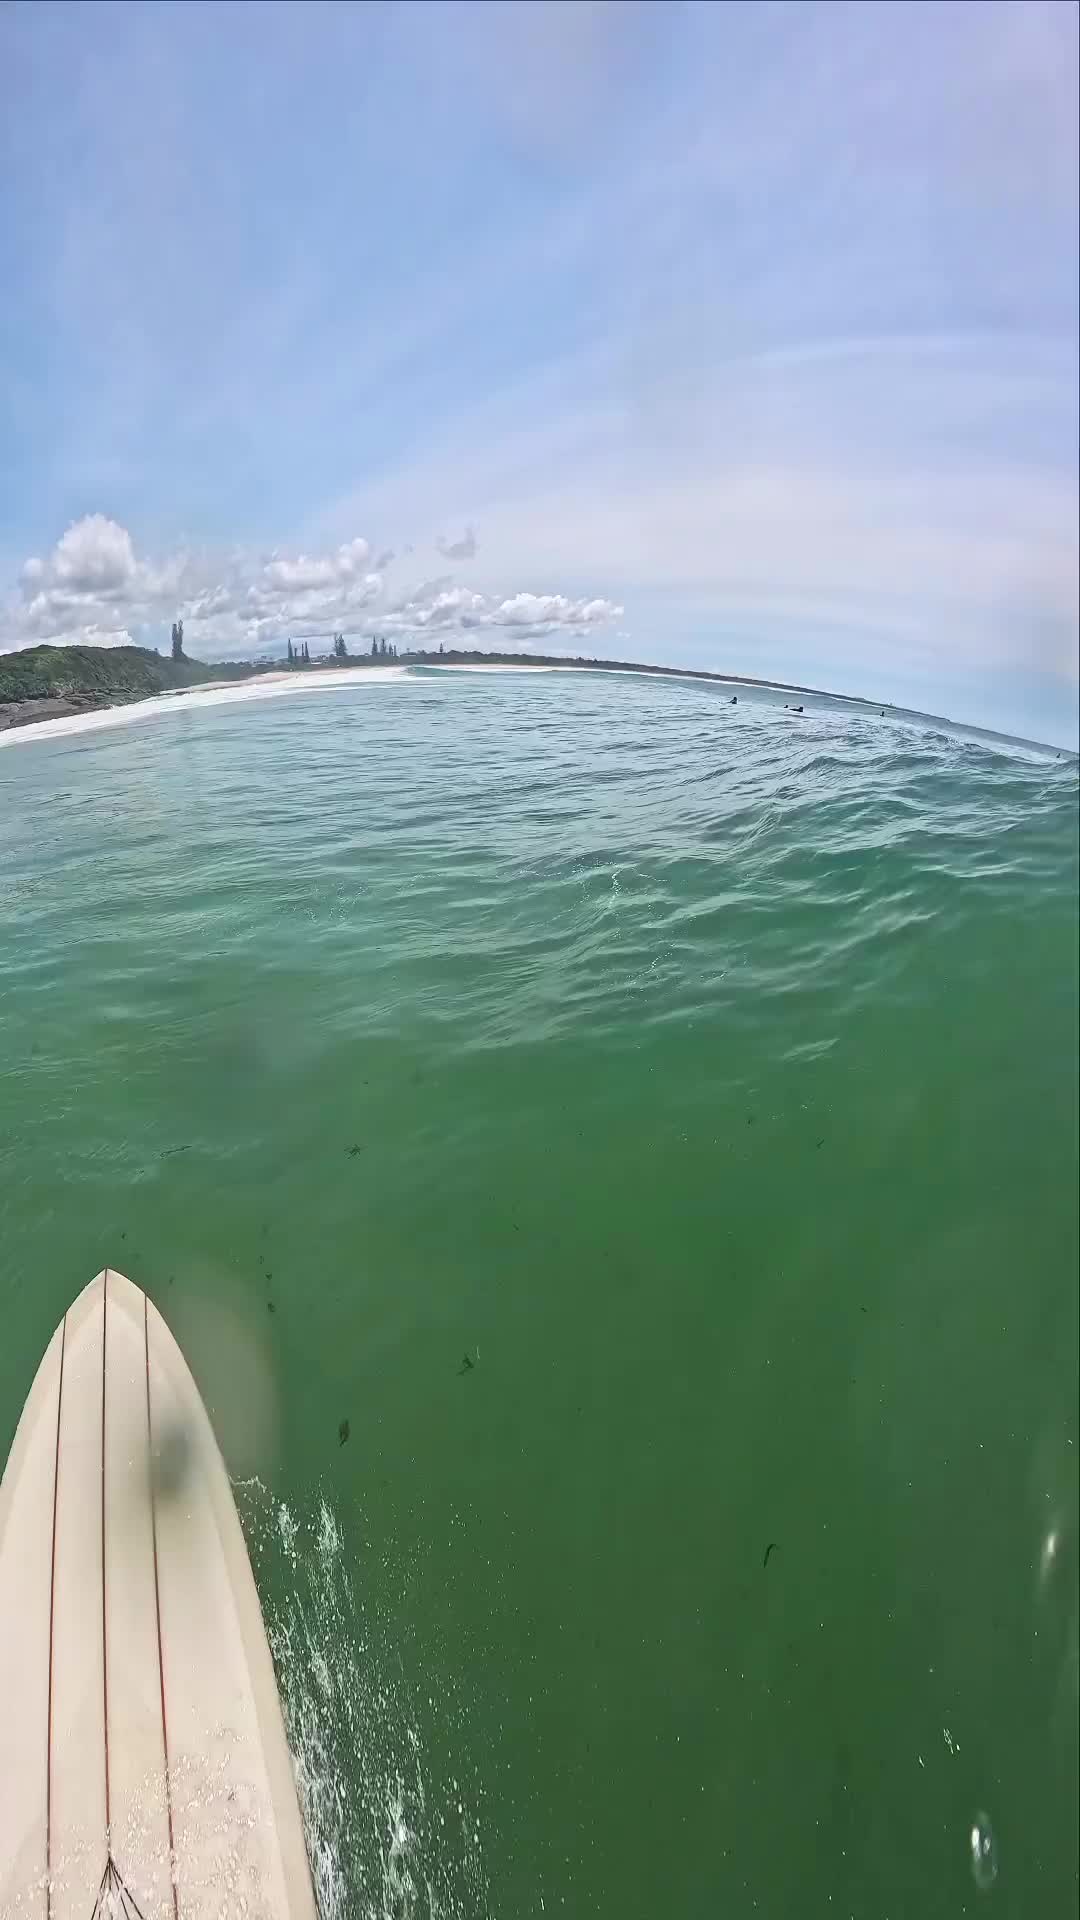 Surfing Cabarita Beach: HomeBreak Bliss in Australia